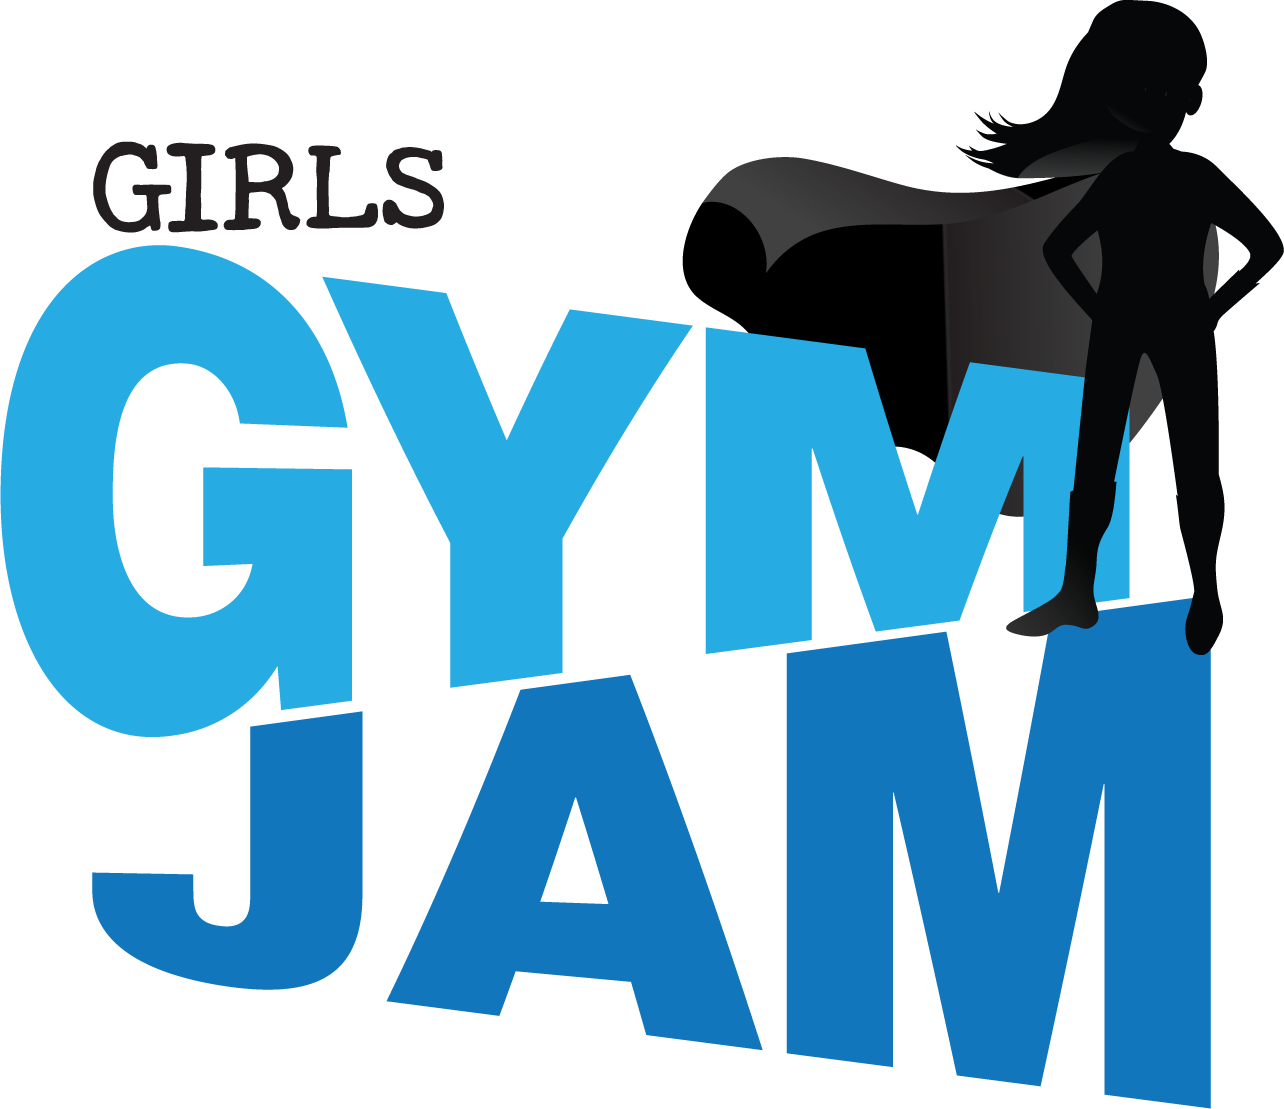 Girls Gym Jam